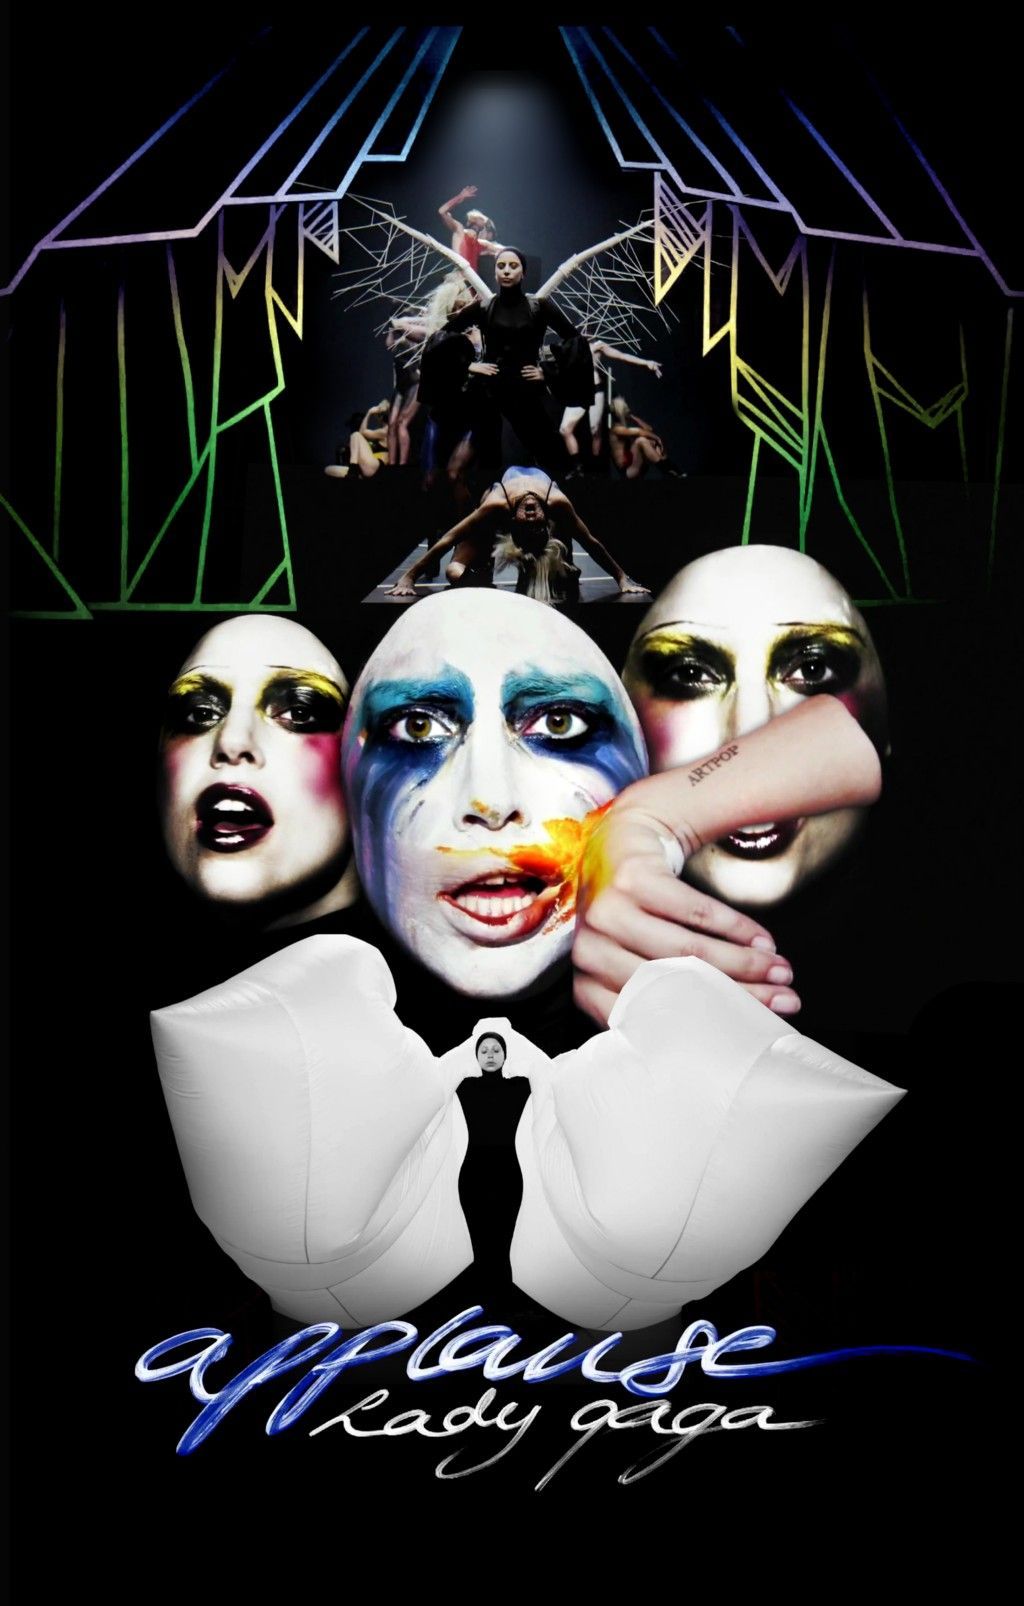 Lady Gaga applause poster vertical wallpaper. Lady gaga applause, Lady gaga artpop, Lady gaga